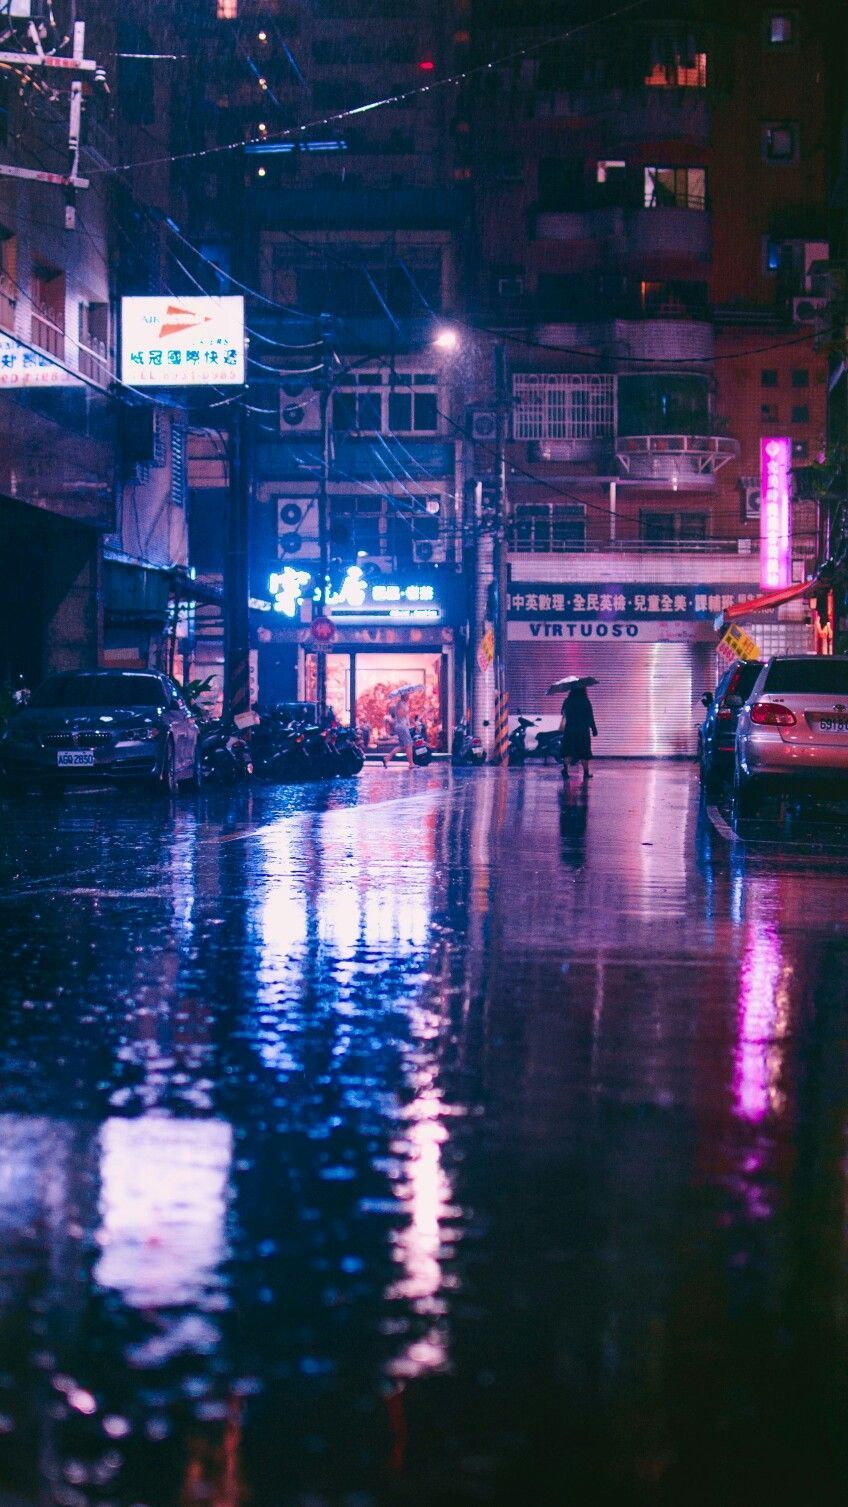 IPhone wallpaper of a rainy street at night in Tokyo - City, rain